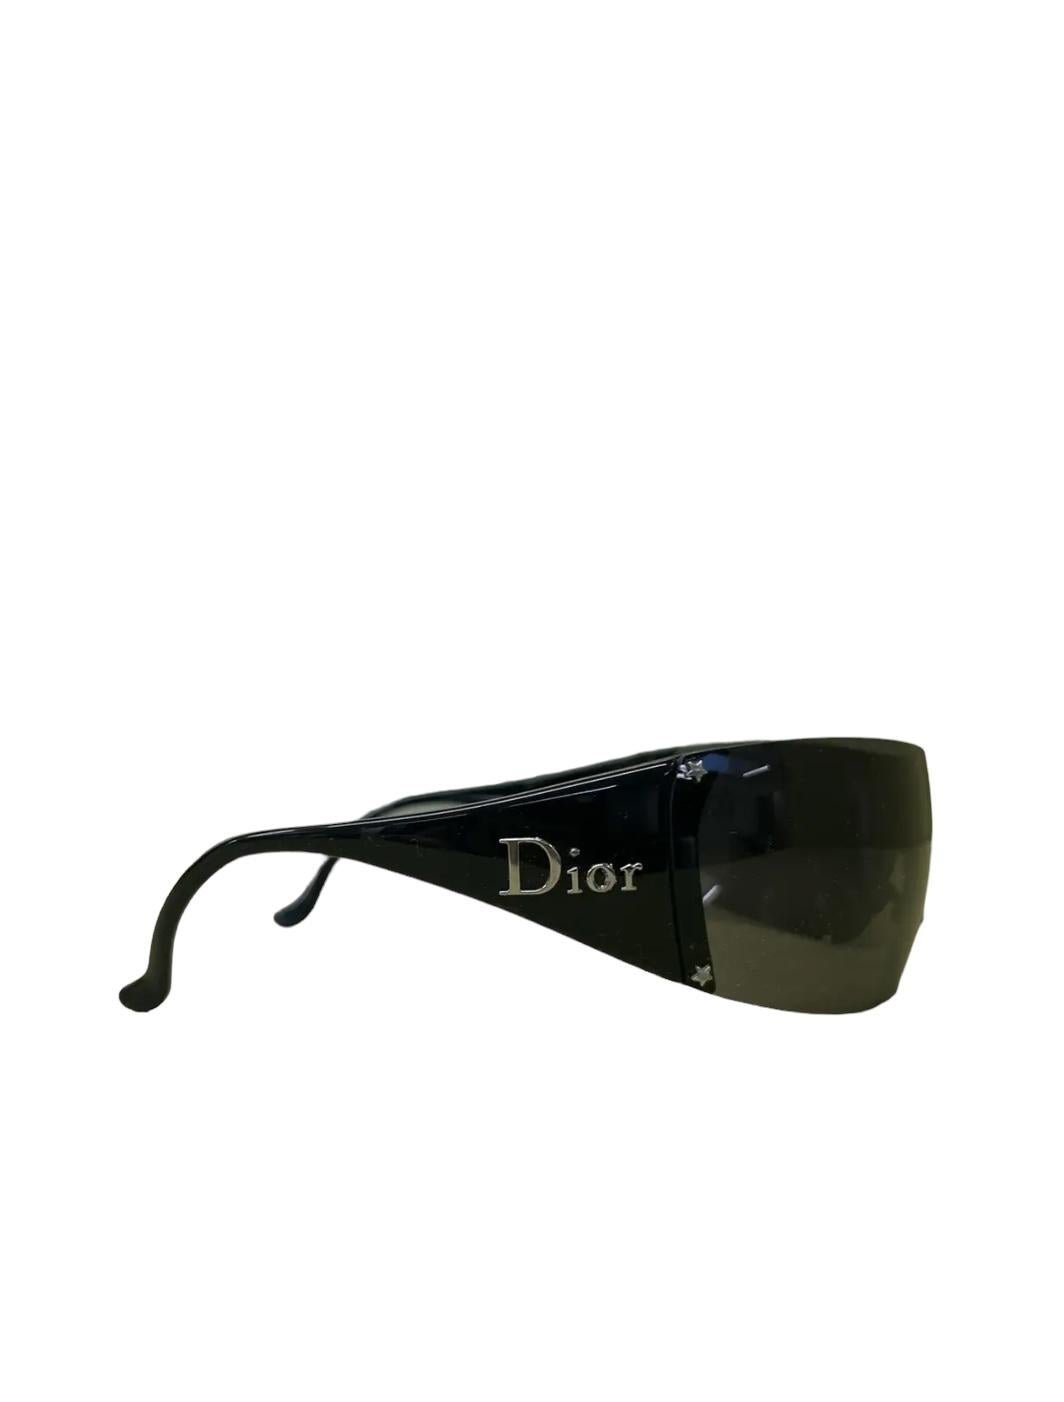 Dior Ski 5 Black Rimless Sunglasses In Good Condition For Sale In LISSE, NL